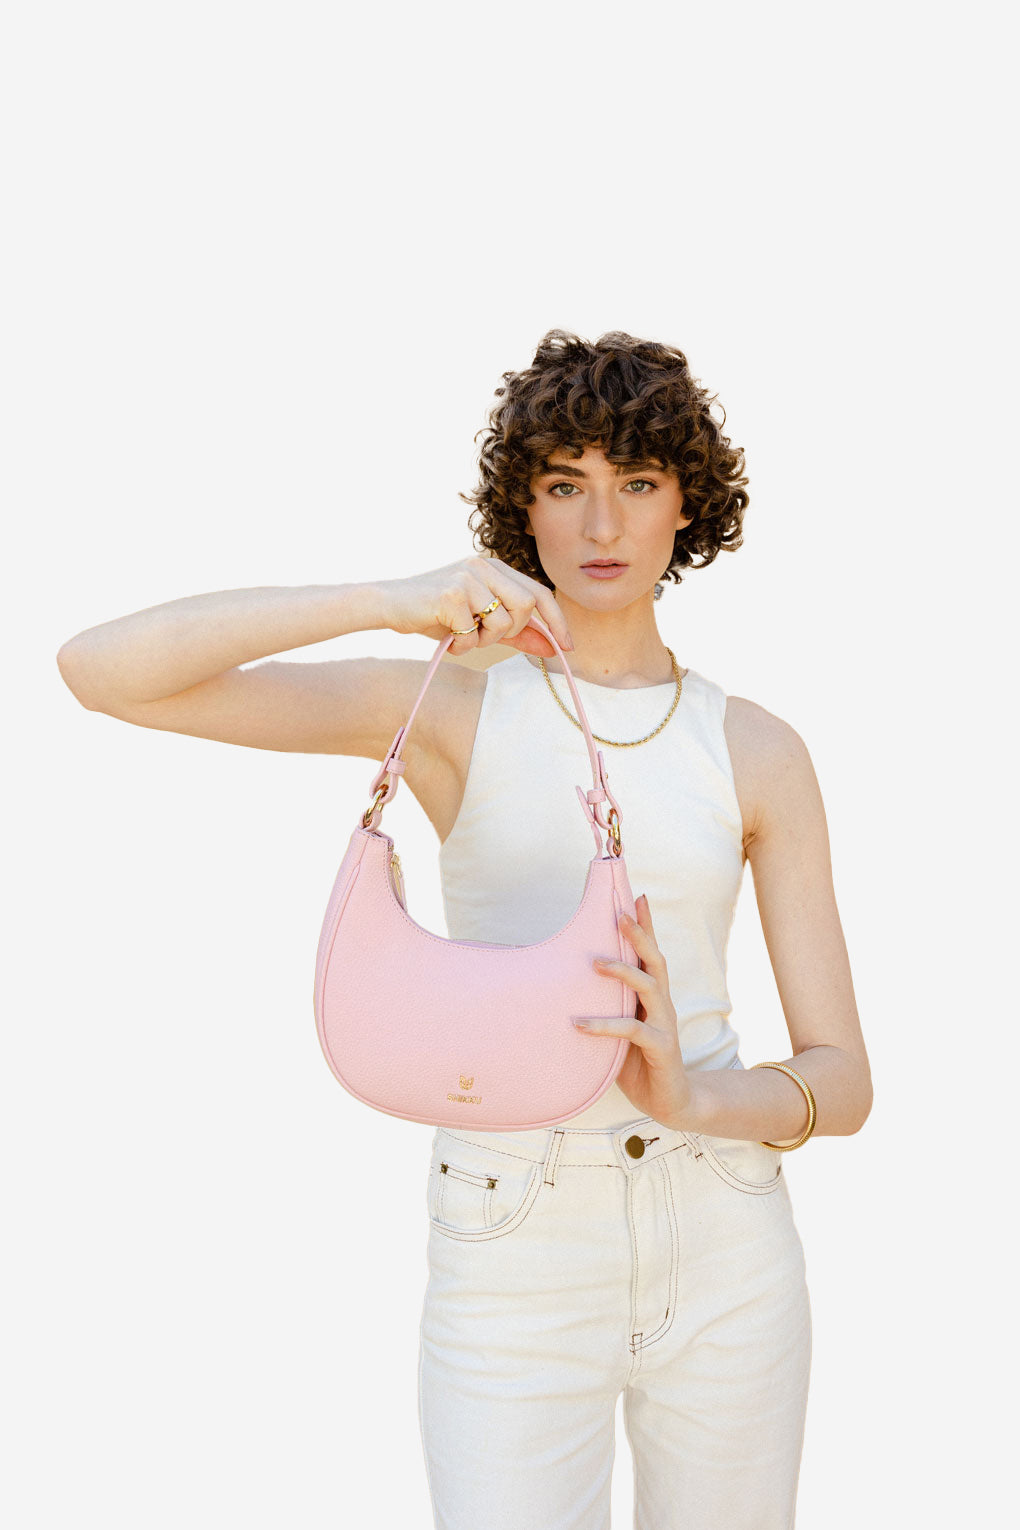 Hobo Leather Bag - Pink